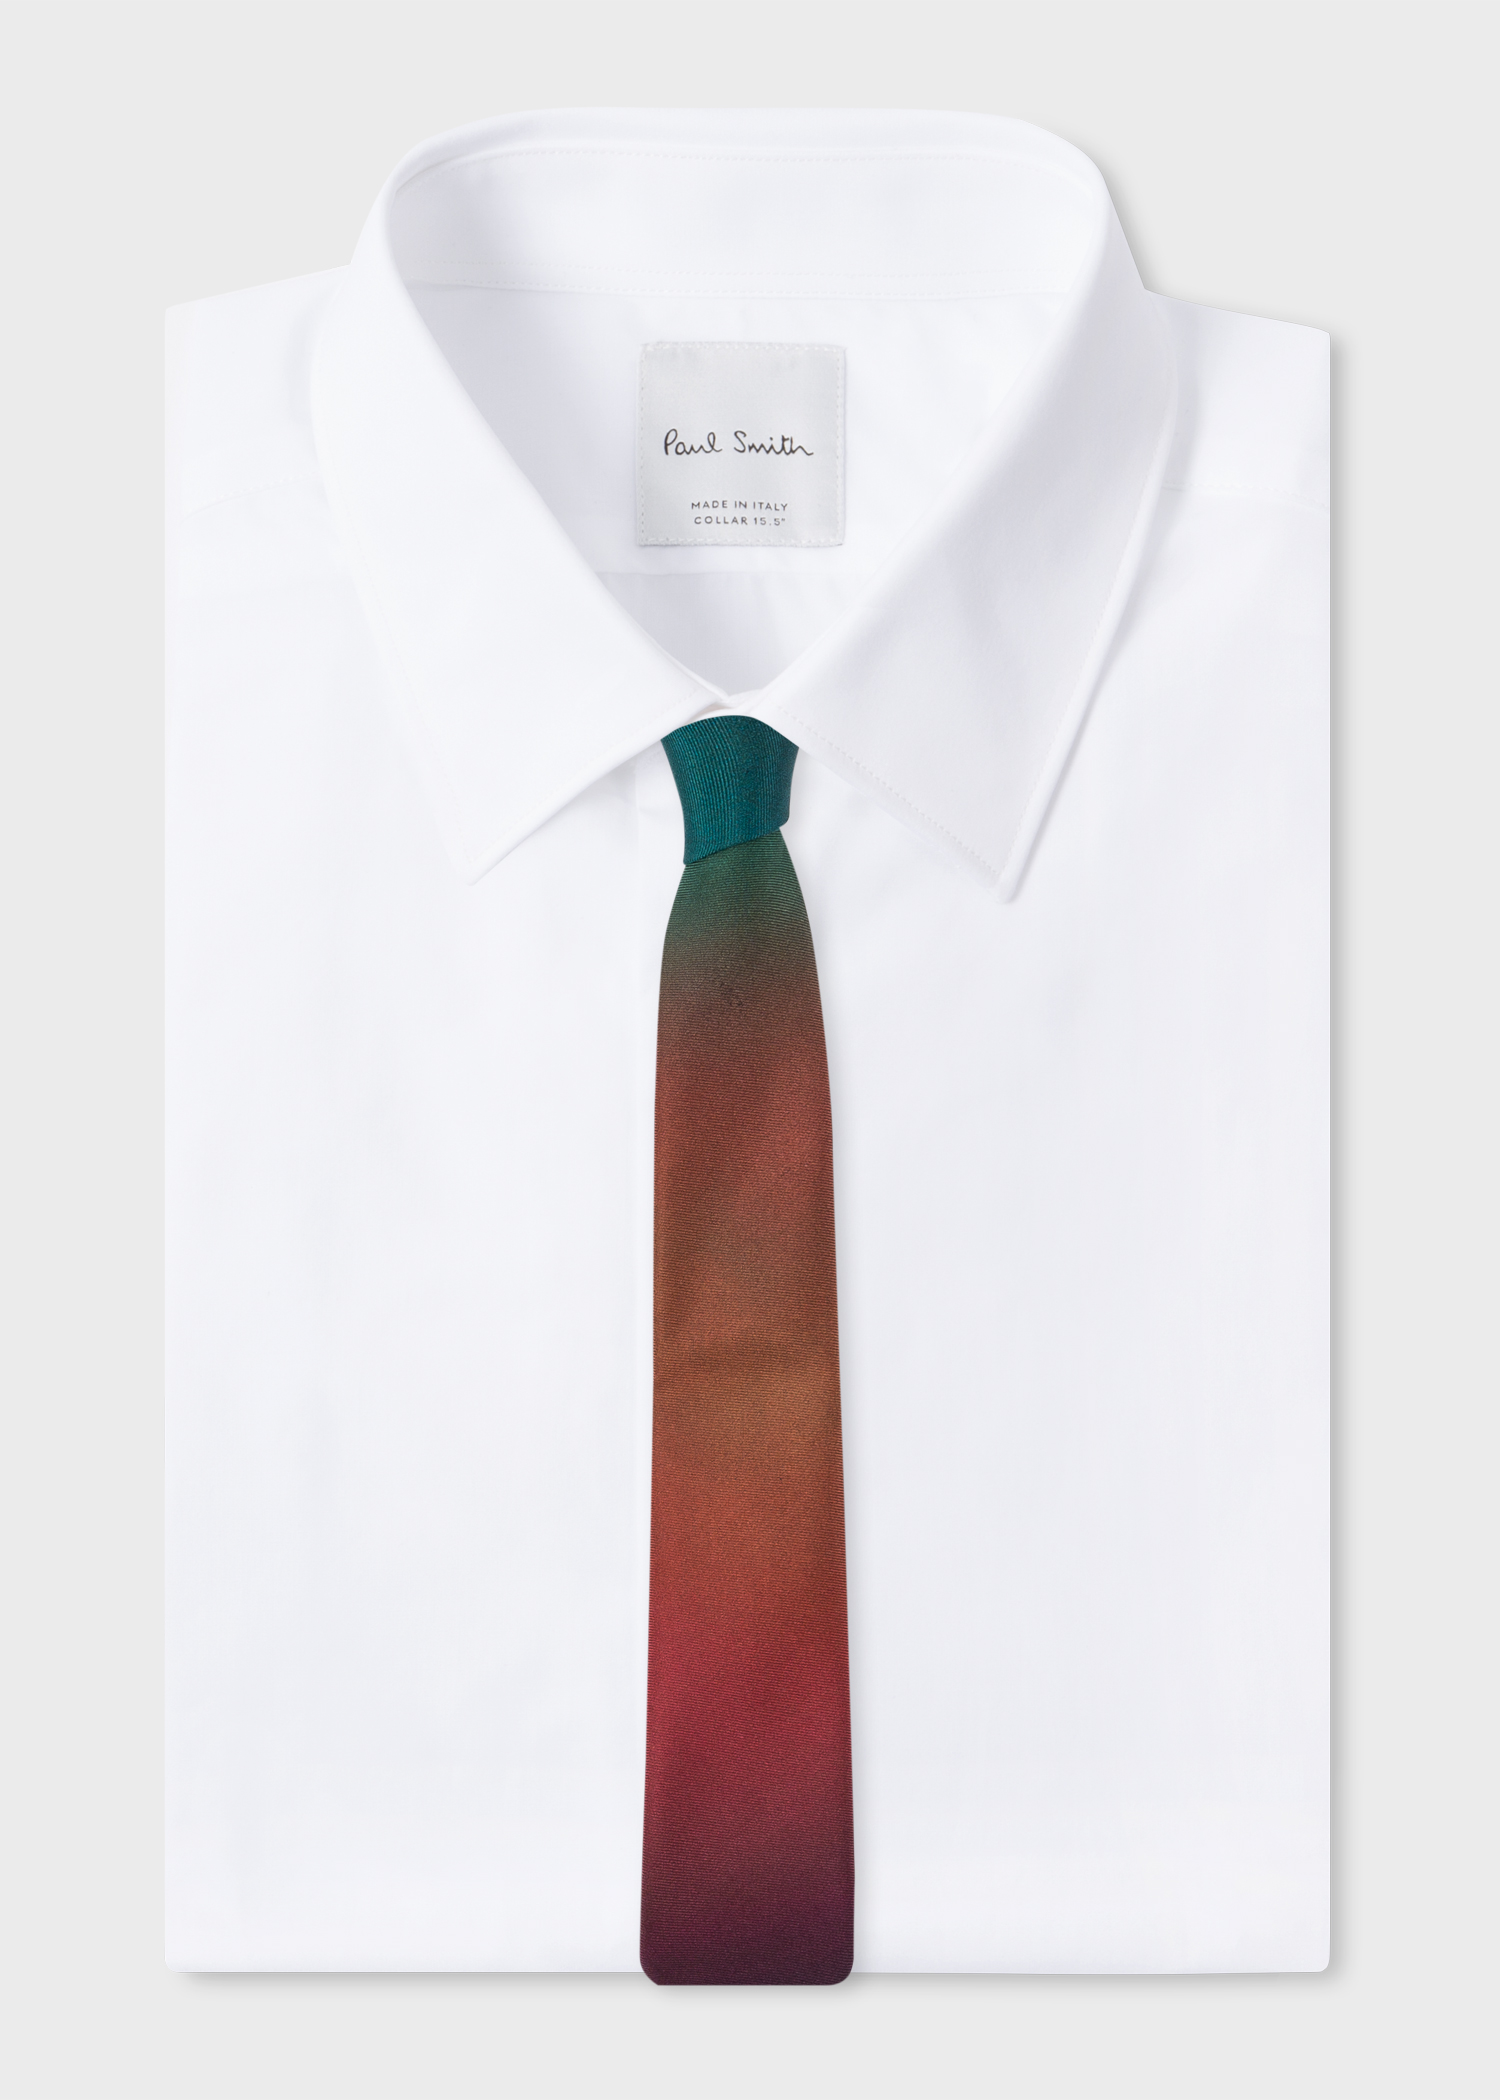 On Shirt View - Men's Multi-Coloured Gradient Narrow Silk Tie Paul Smith